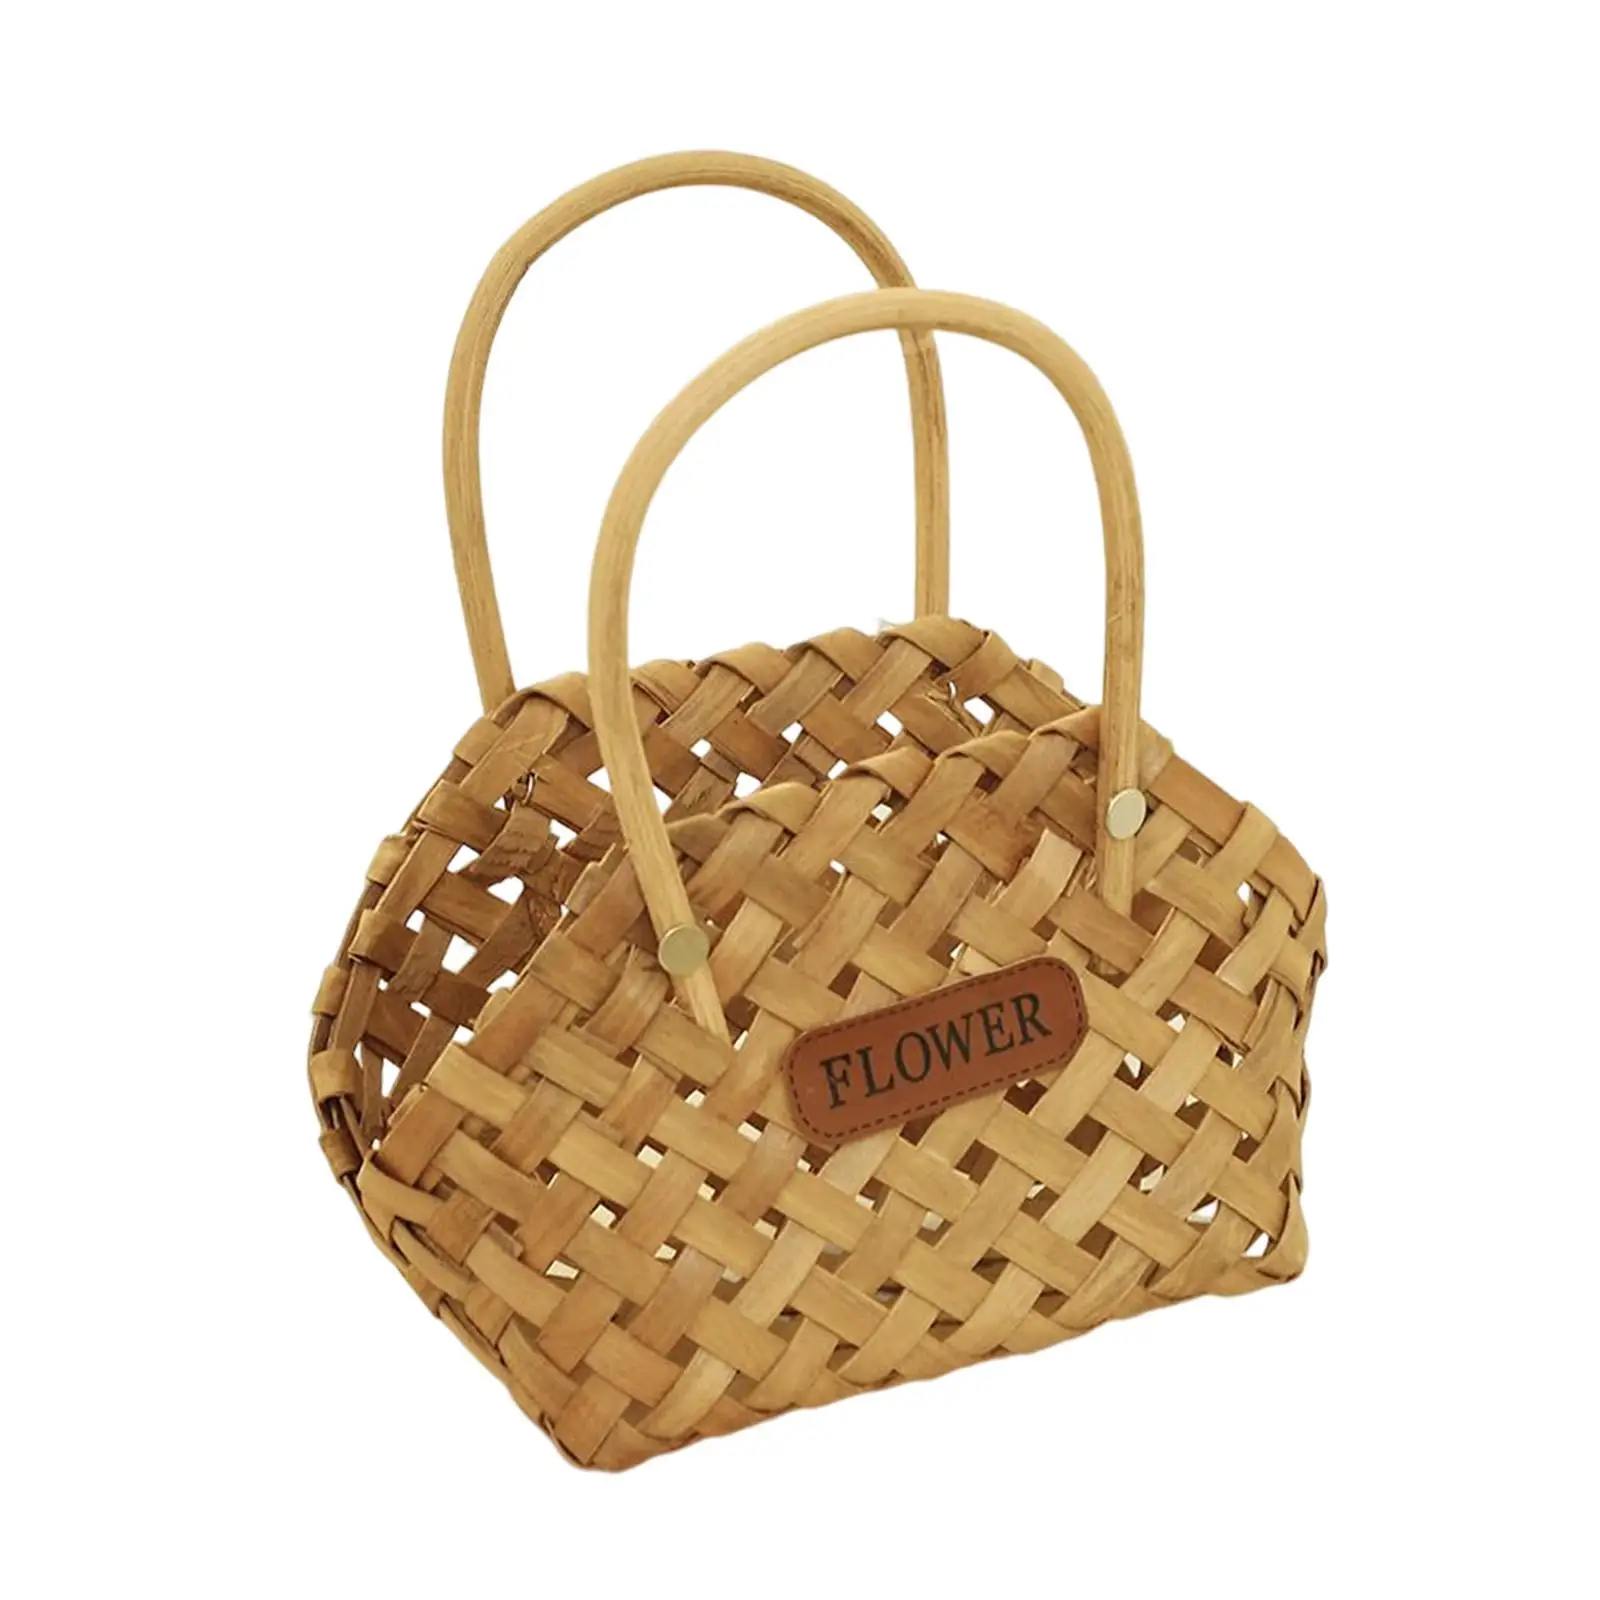 Woven Flower Basket Portable Rustic Wood Chip Picnic Basket Wooden Woven Basket for Wedding Stuff Pantry Organization Toy